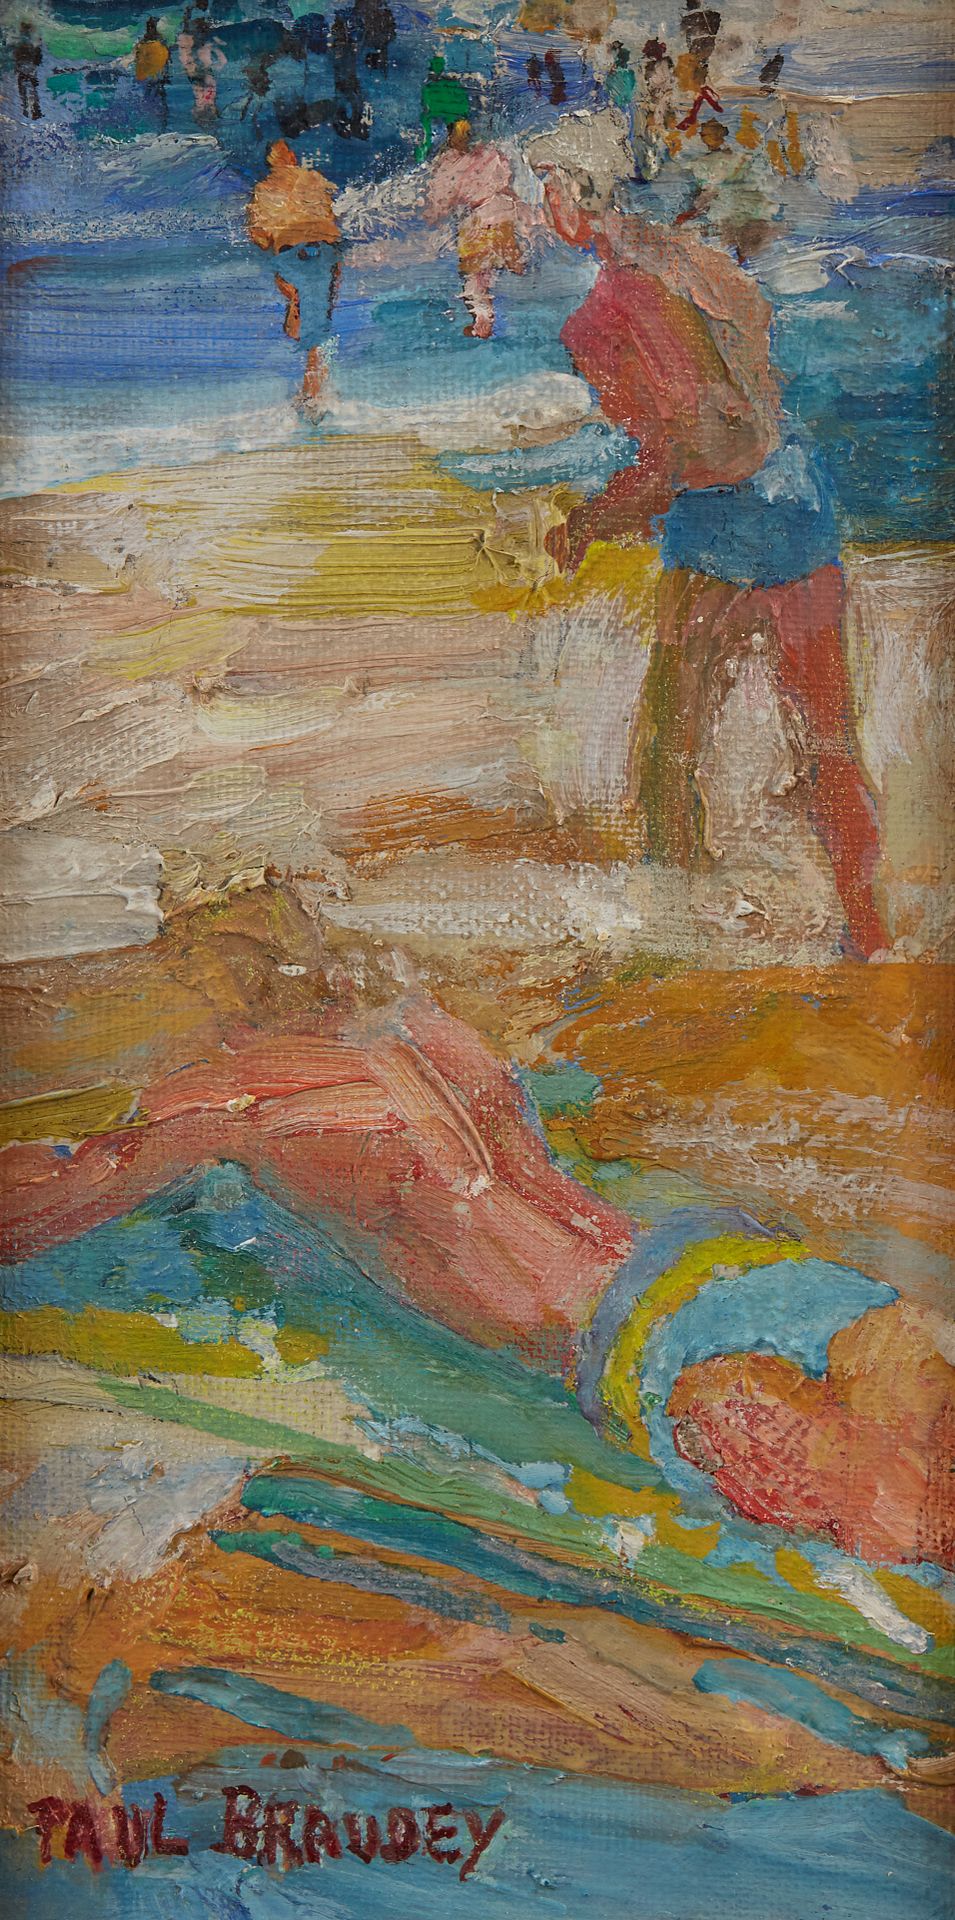 Null 
Paul BRAUDEY (生于1930年)






海滩上的沐浴者 






布面油画，左下角有签名






22 x 12 cm